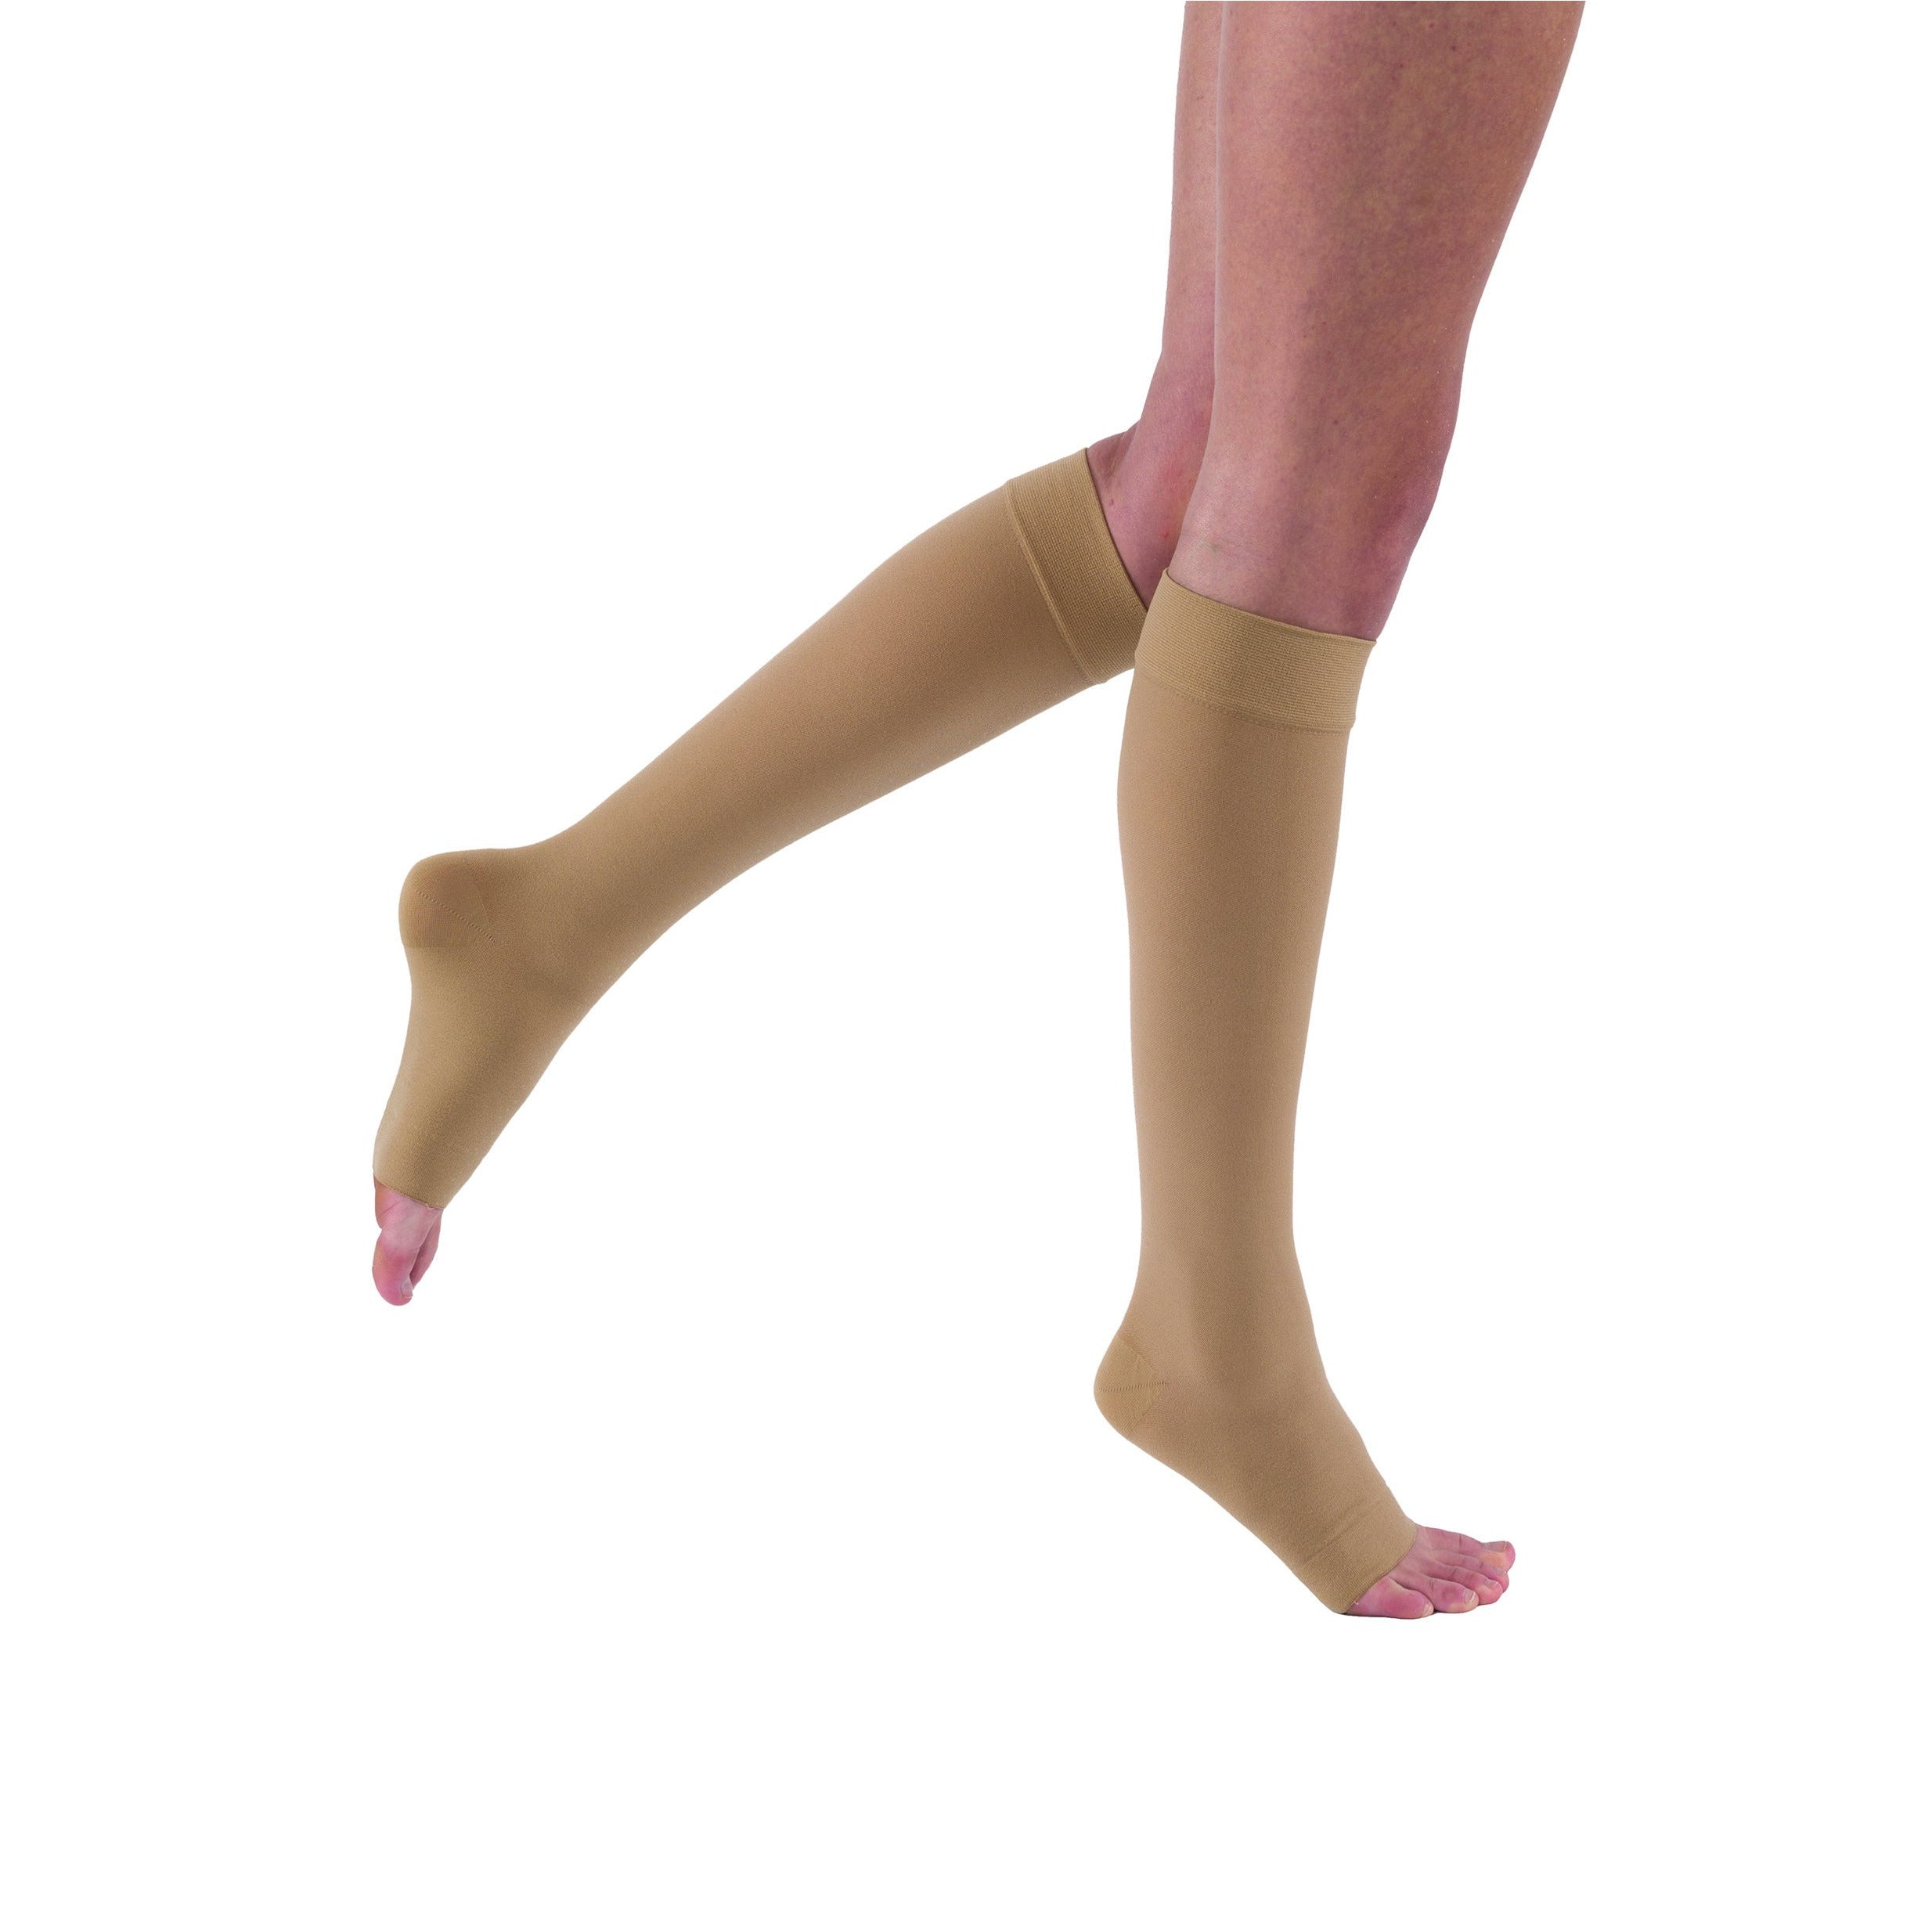 Womens Open Toe Compression Stockings 30-40mmHg for Edema, DVT - Beige,  Medium